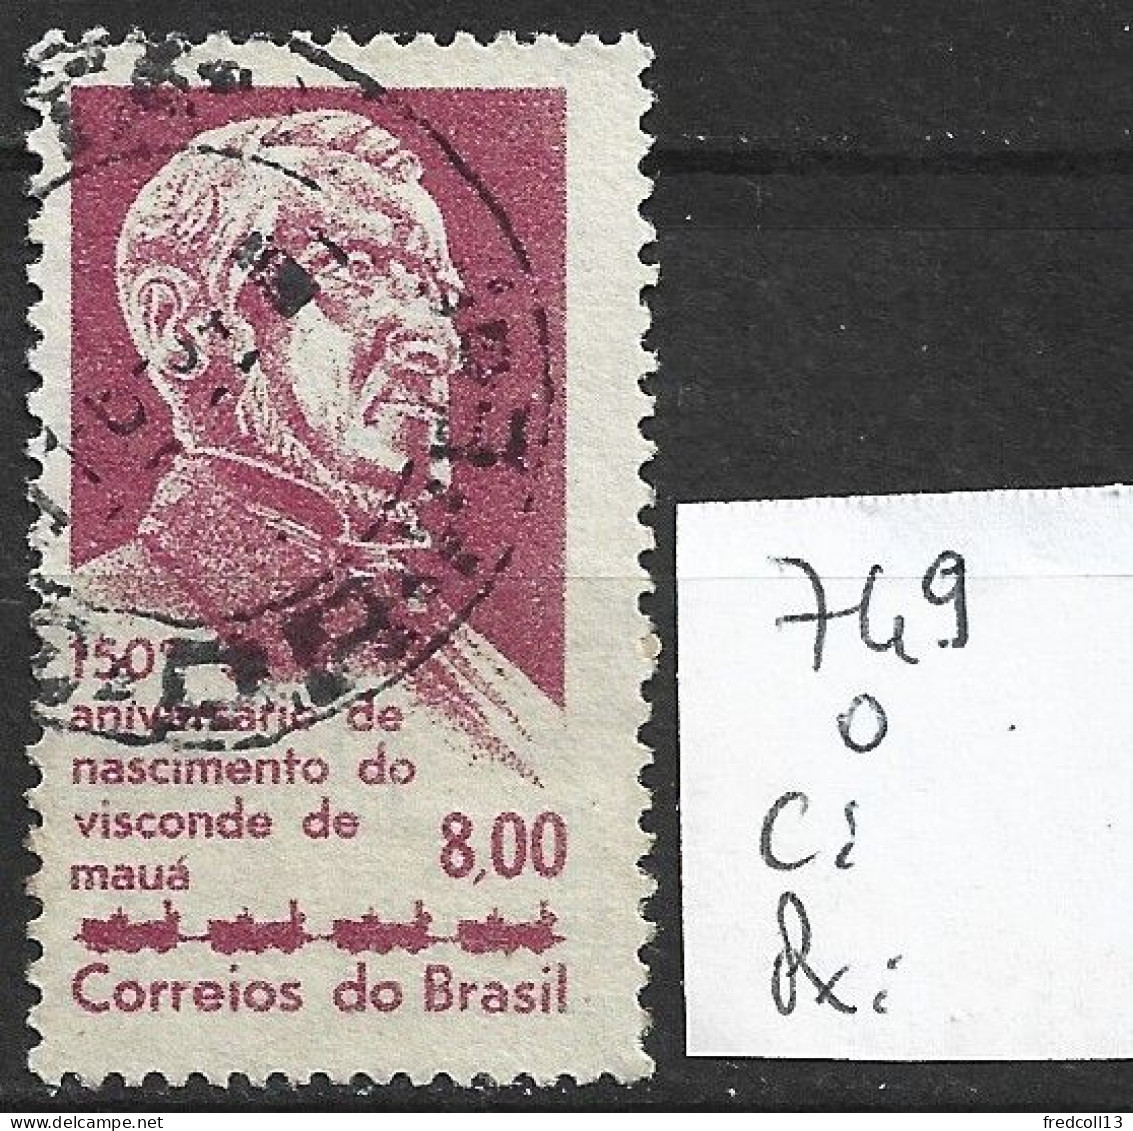 BRESIL 749 Oblitéré Côte 0.20 € - Used Stamps